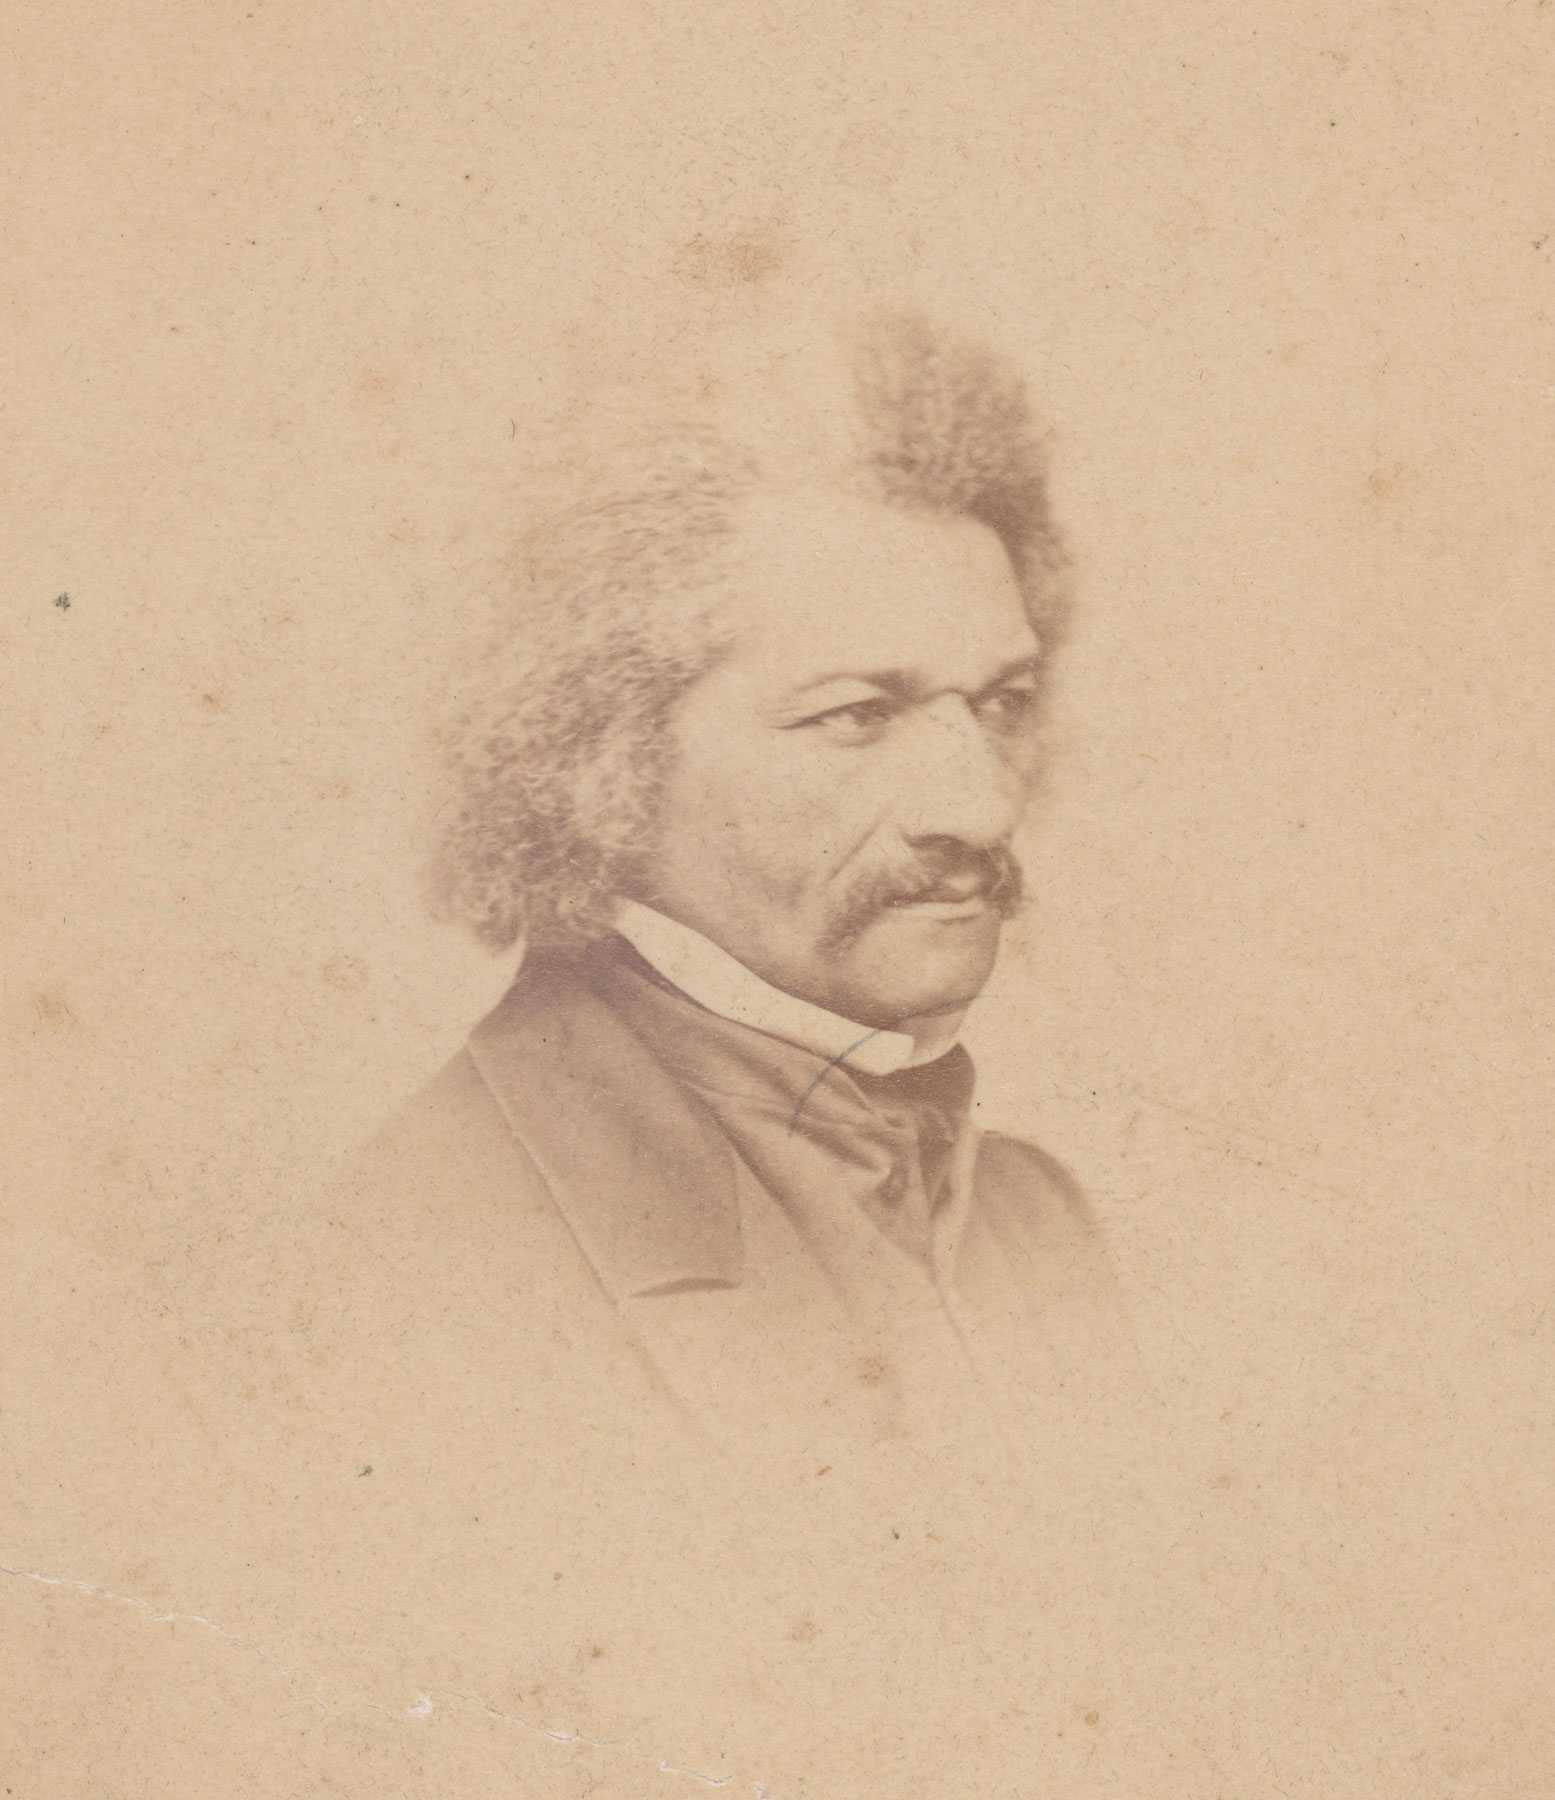 Sepia toned, photograph of Frederick Douglass.